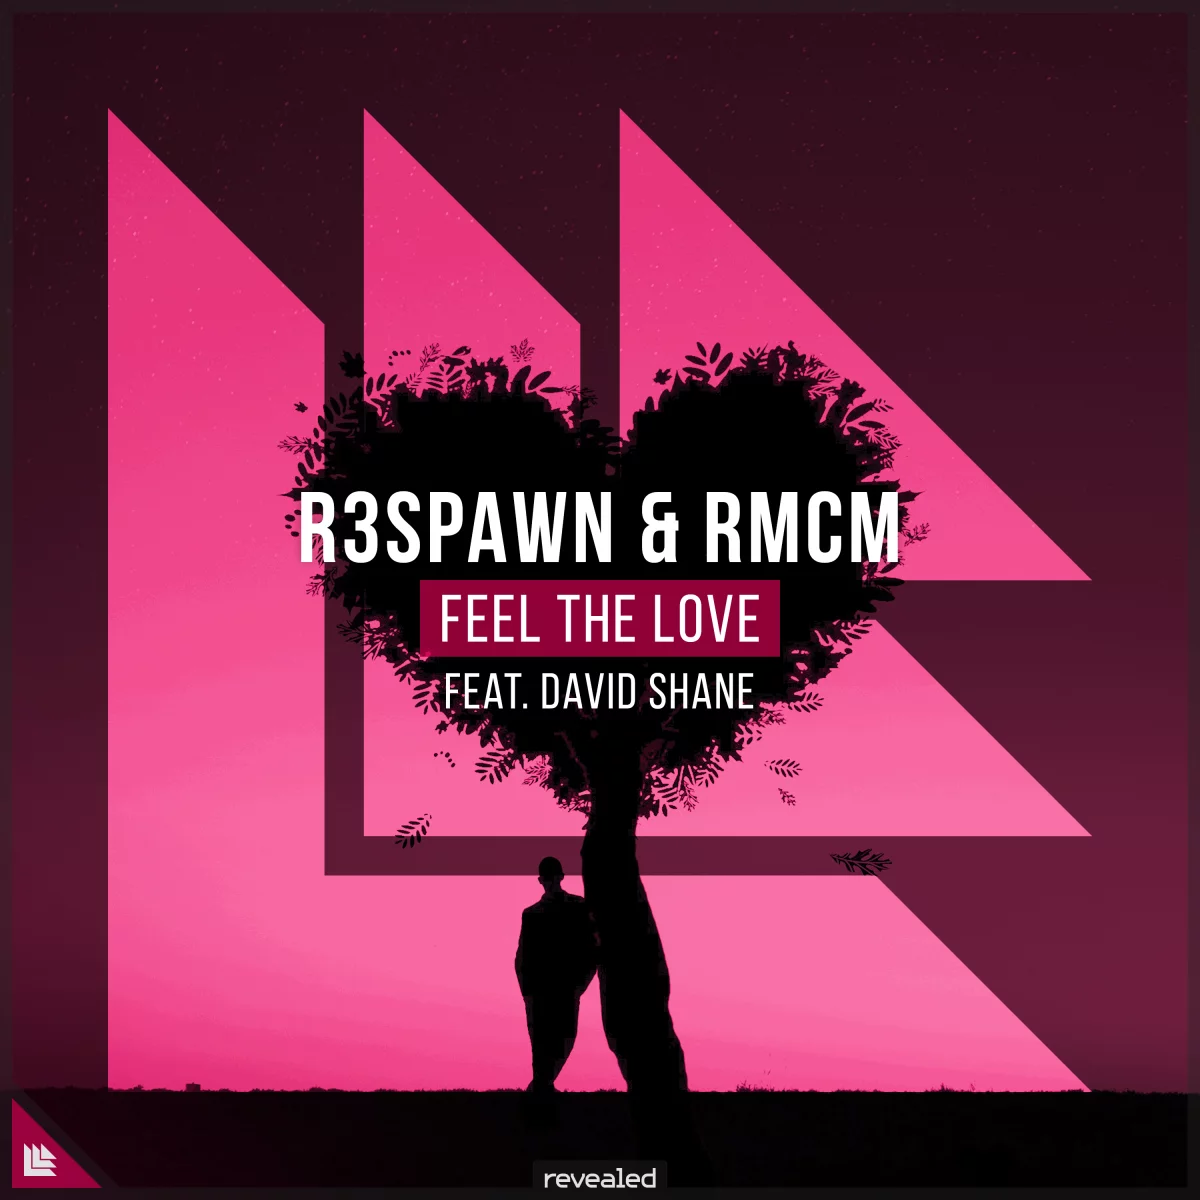 Feel The Love - R3SPAWN⁠ & RMCM⁠ feat. David Shane⁠